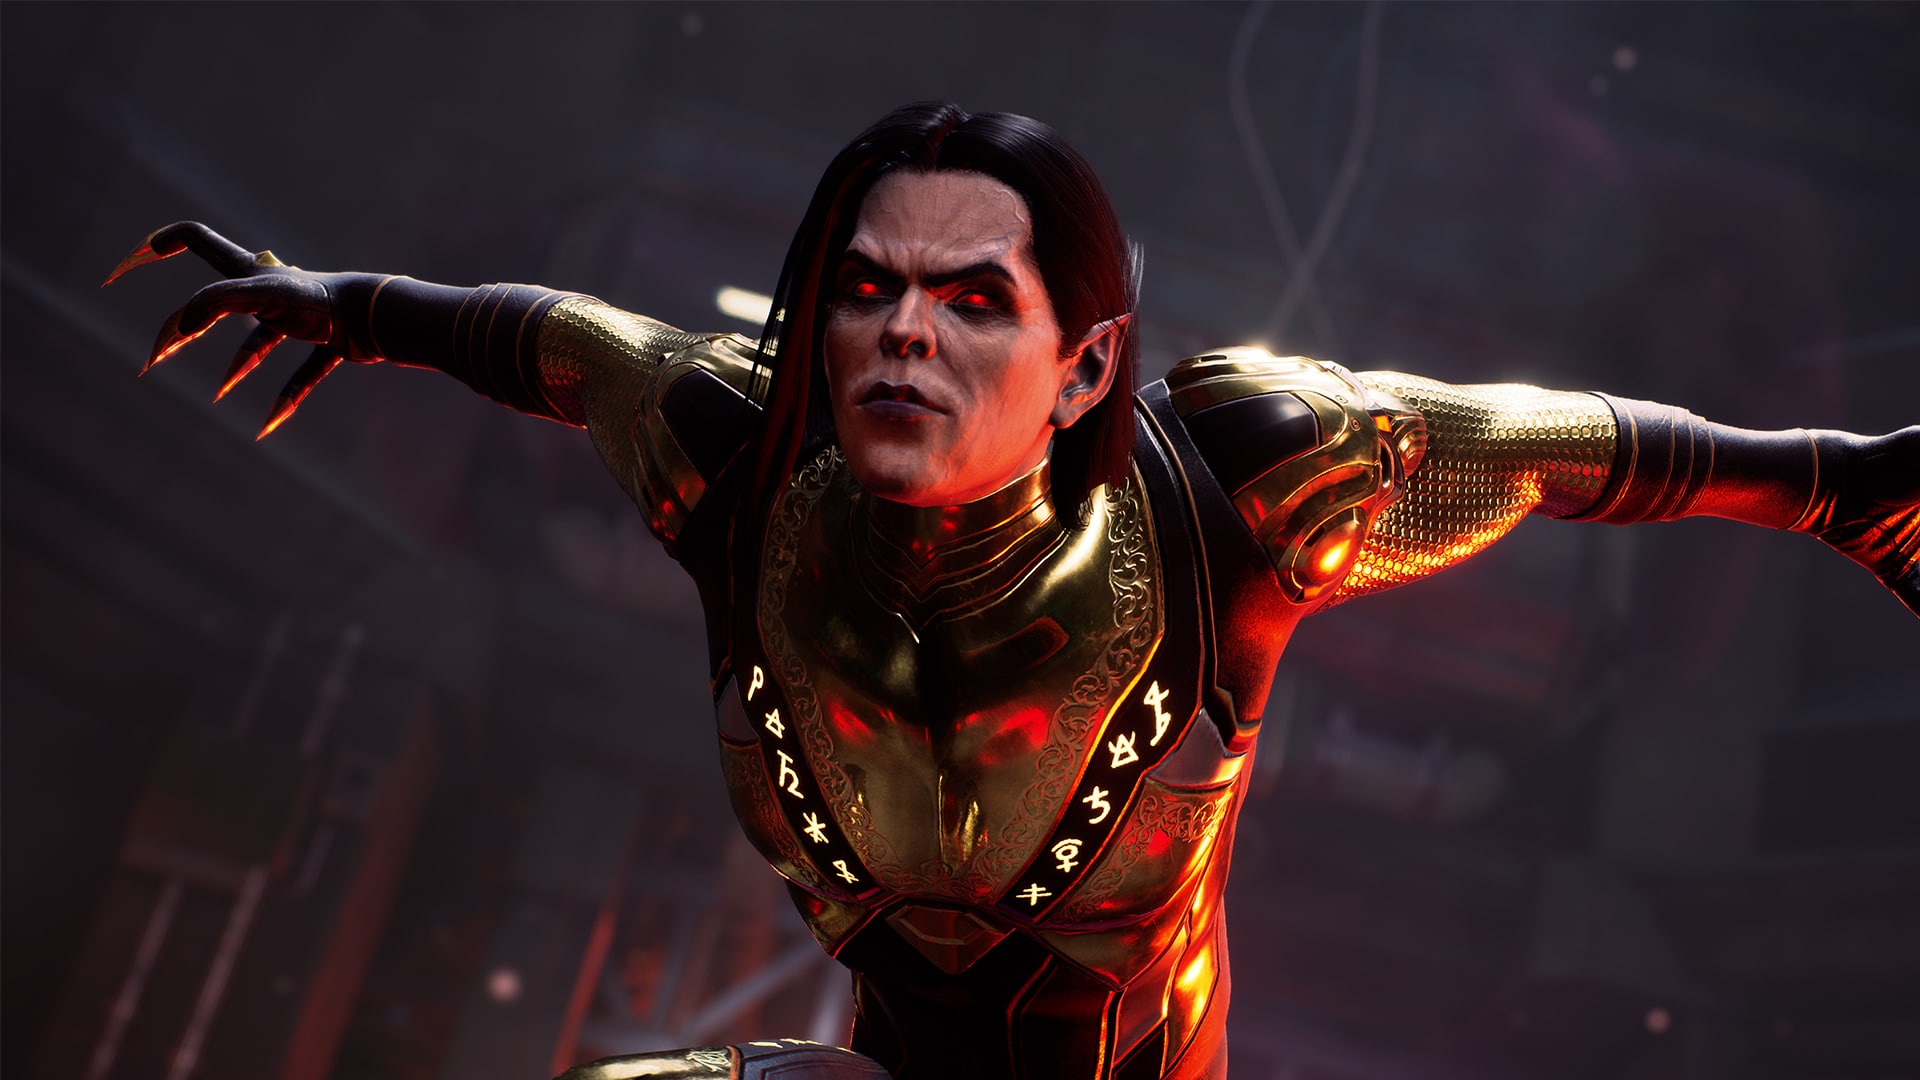 Morbius Gameplay Showcase  Marvel's Midnight Suns 